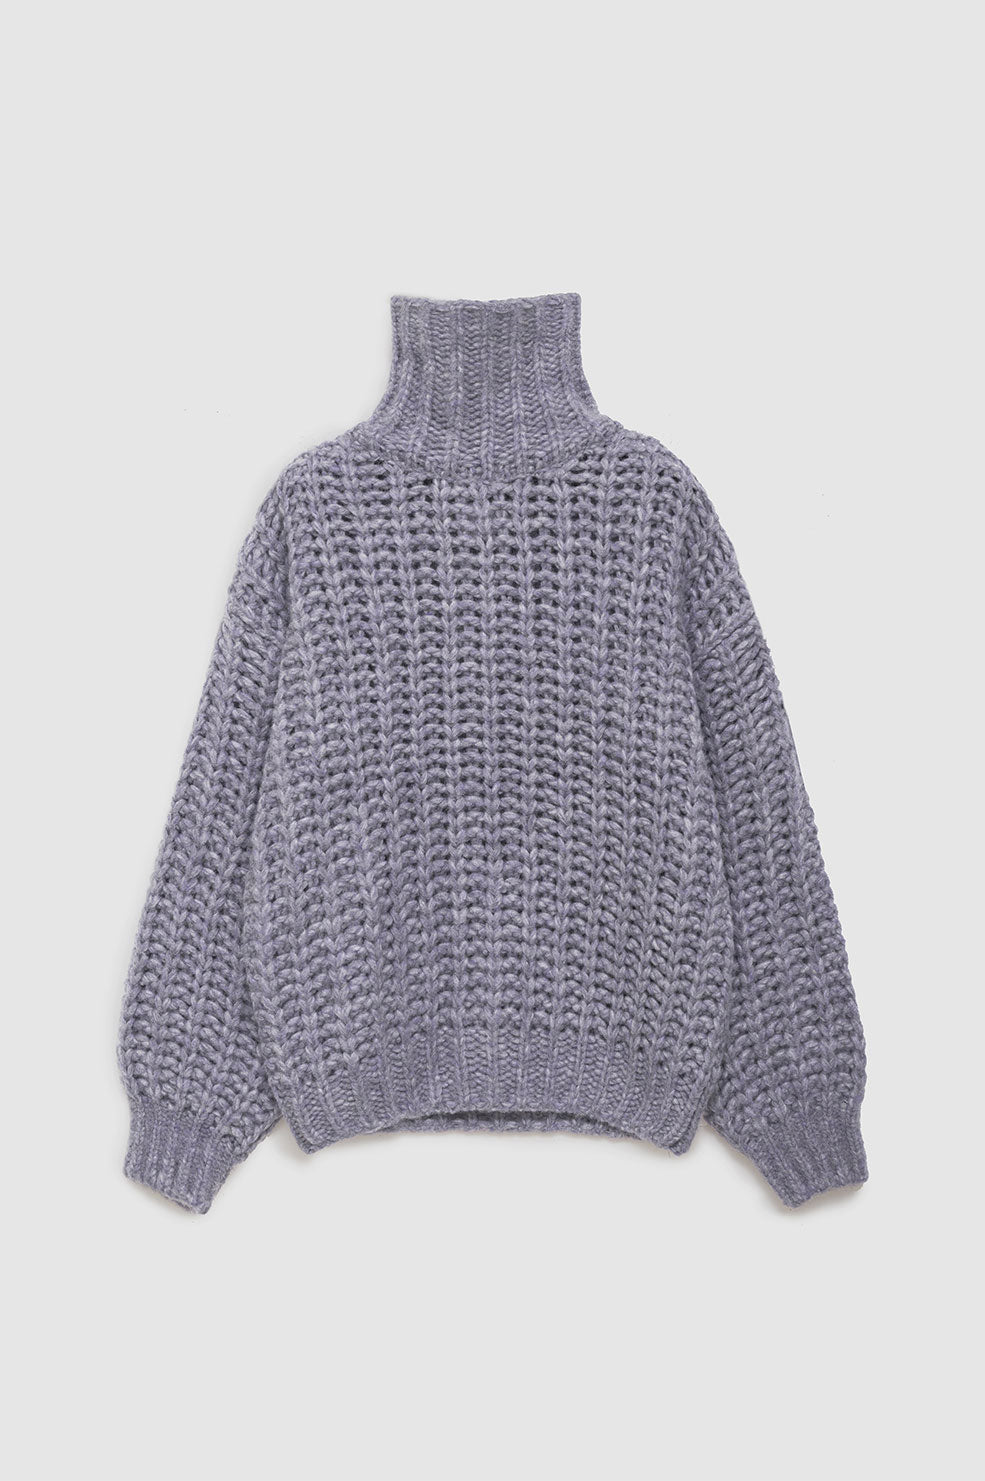 ANINE BING Iris Sweater - Ash Violet - Front View